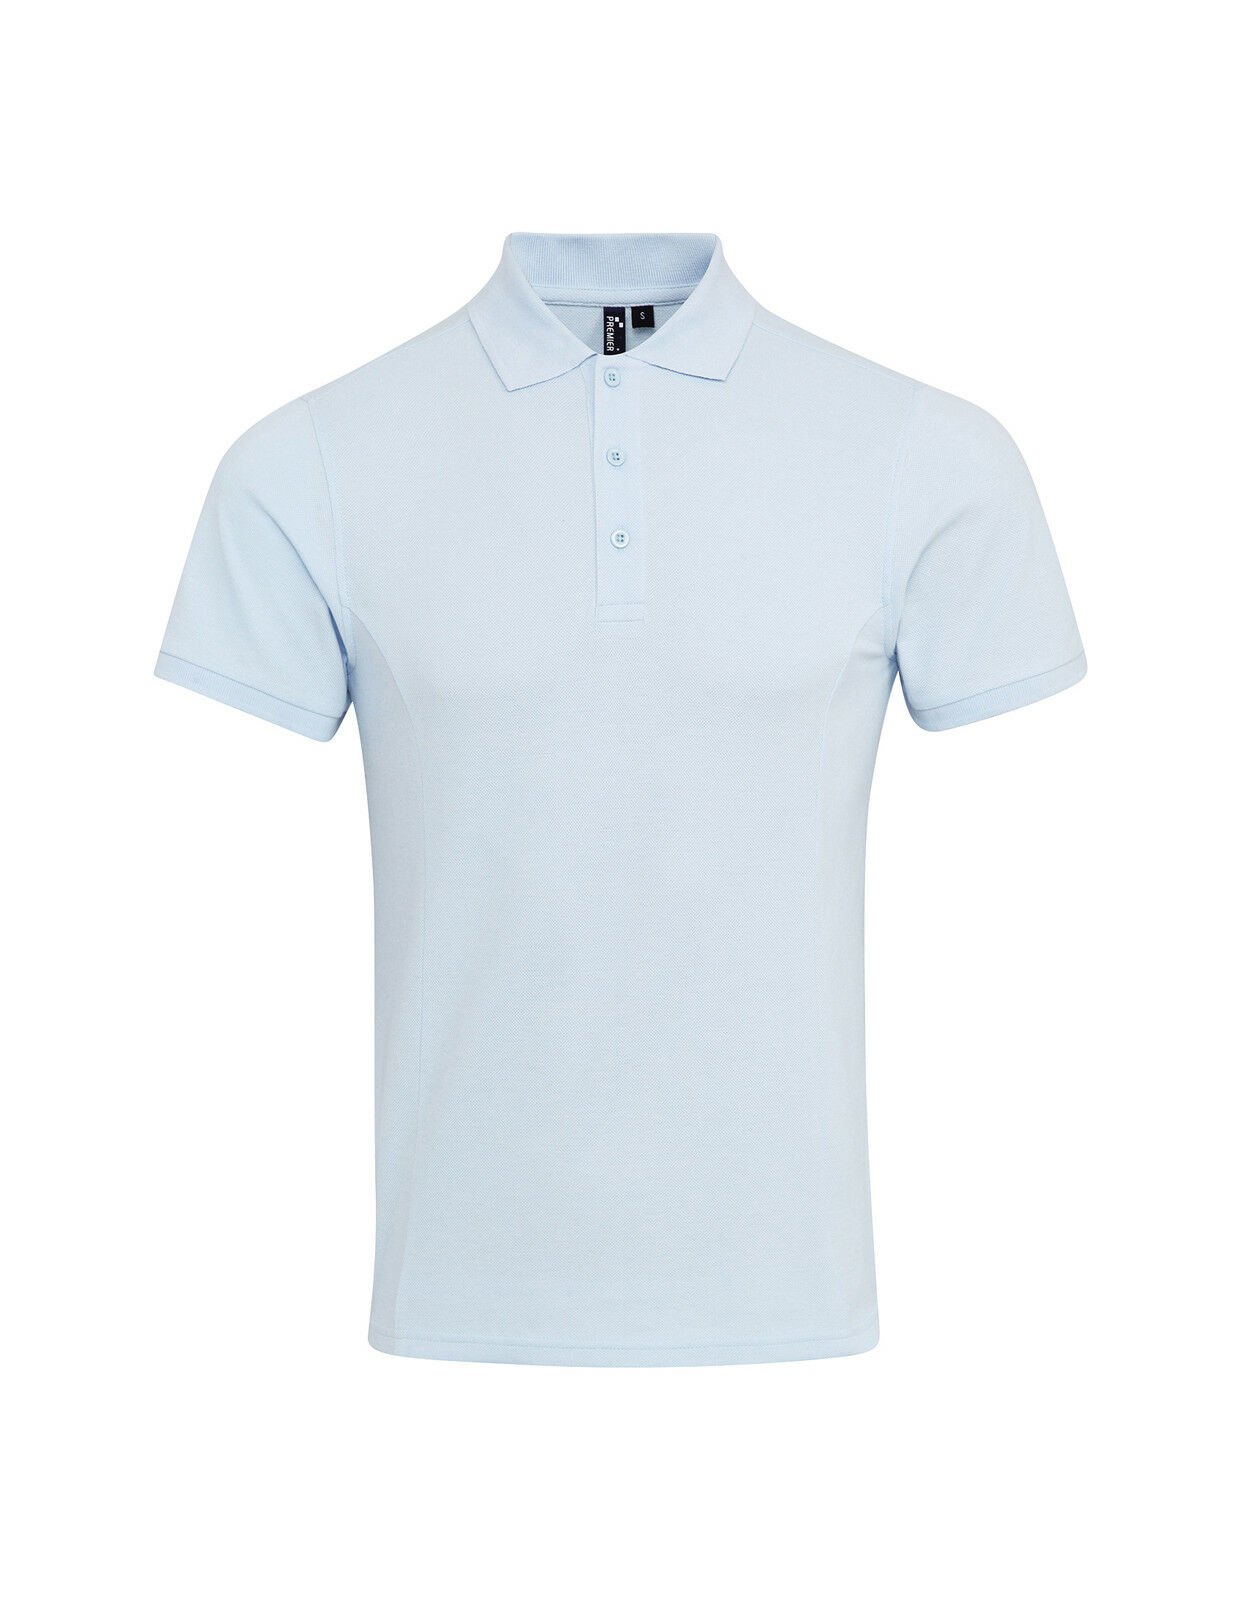 PR630 Cool Checker Breathable Polo Shirt - Simply Hi Vis Clothing UK